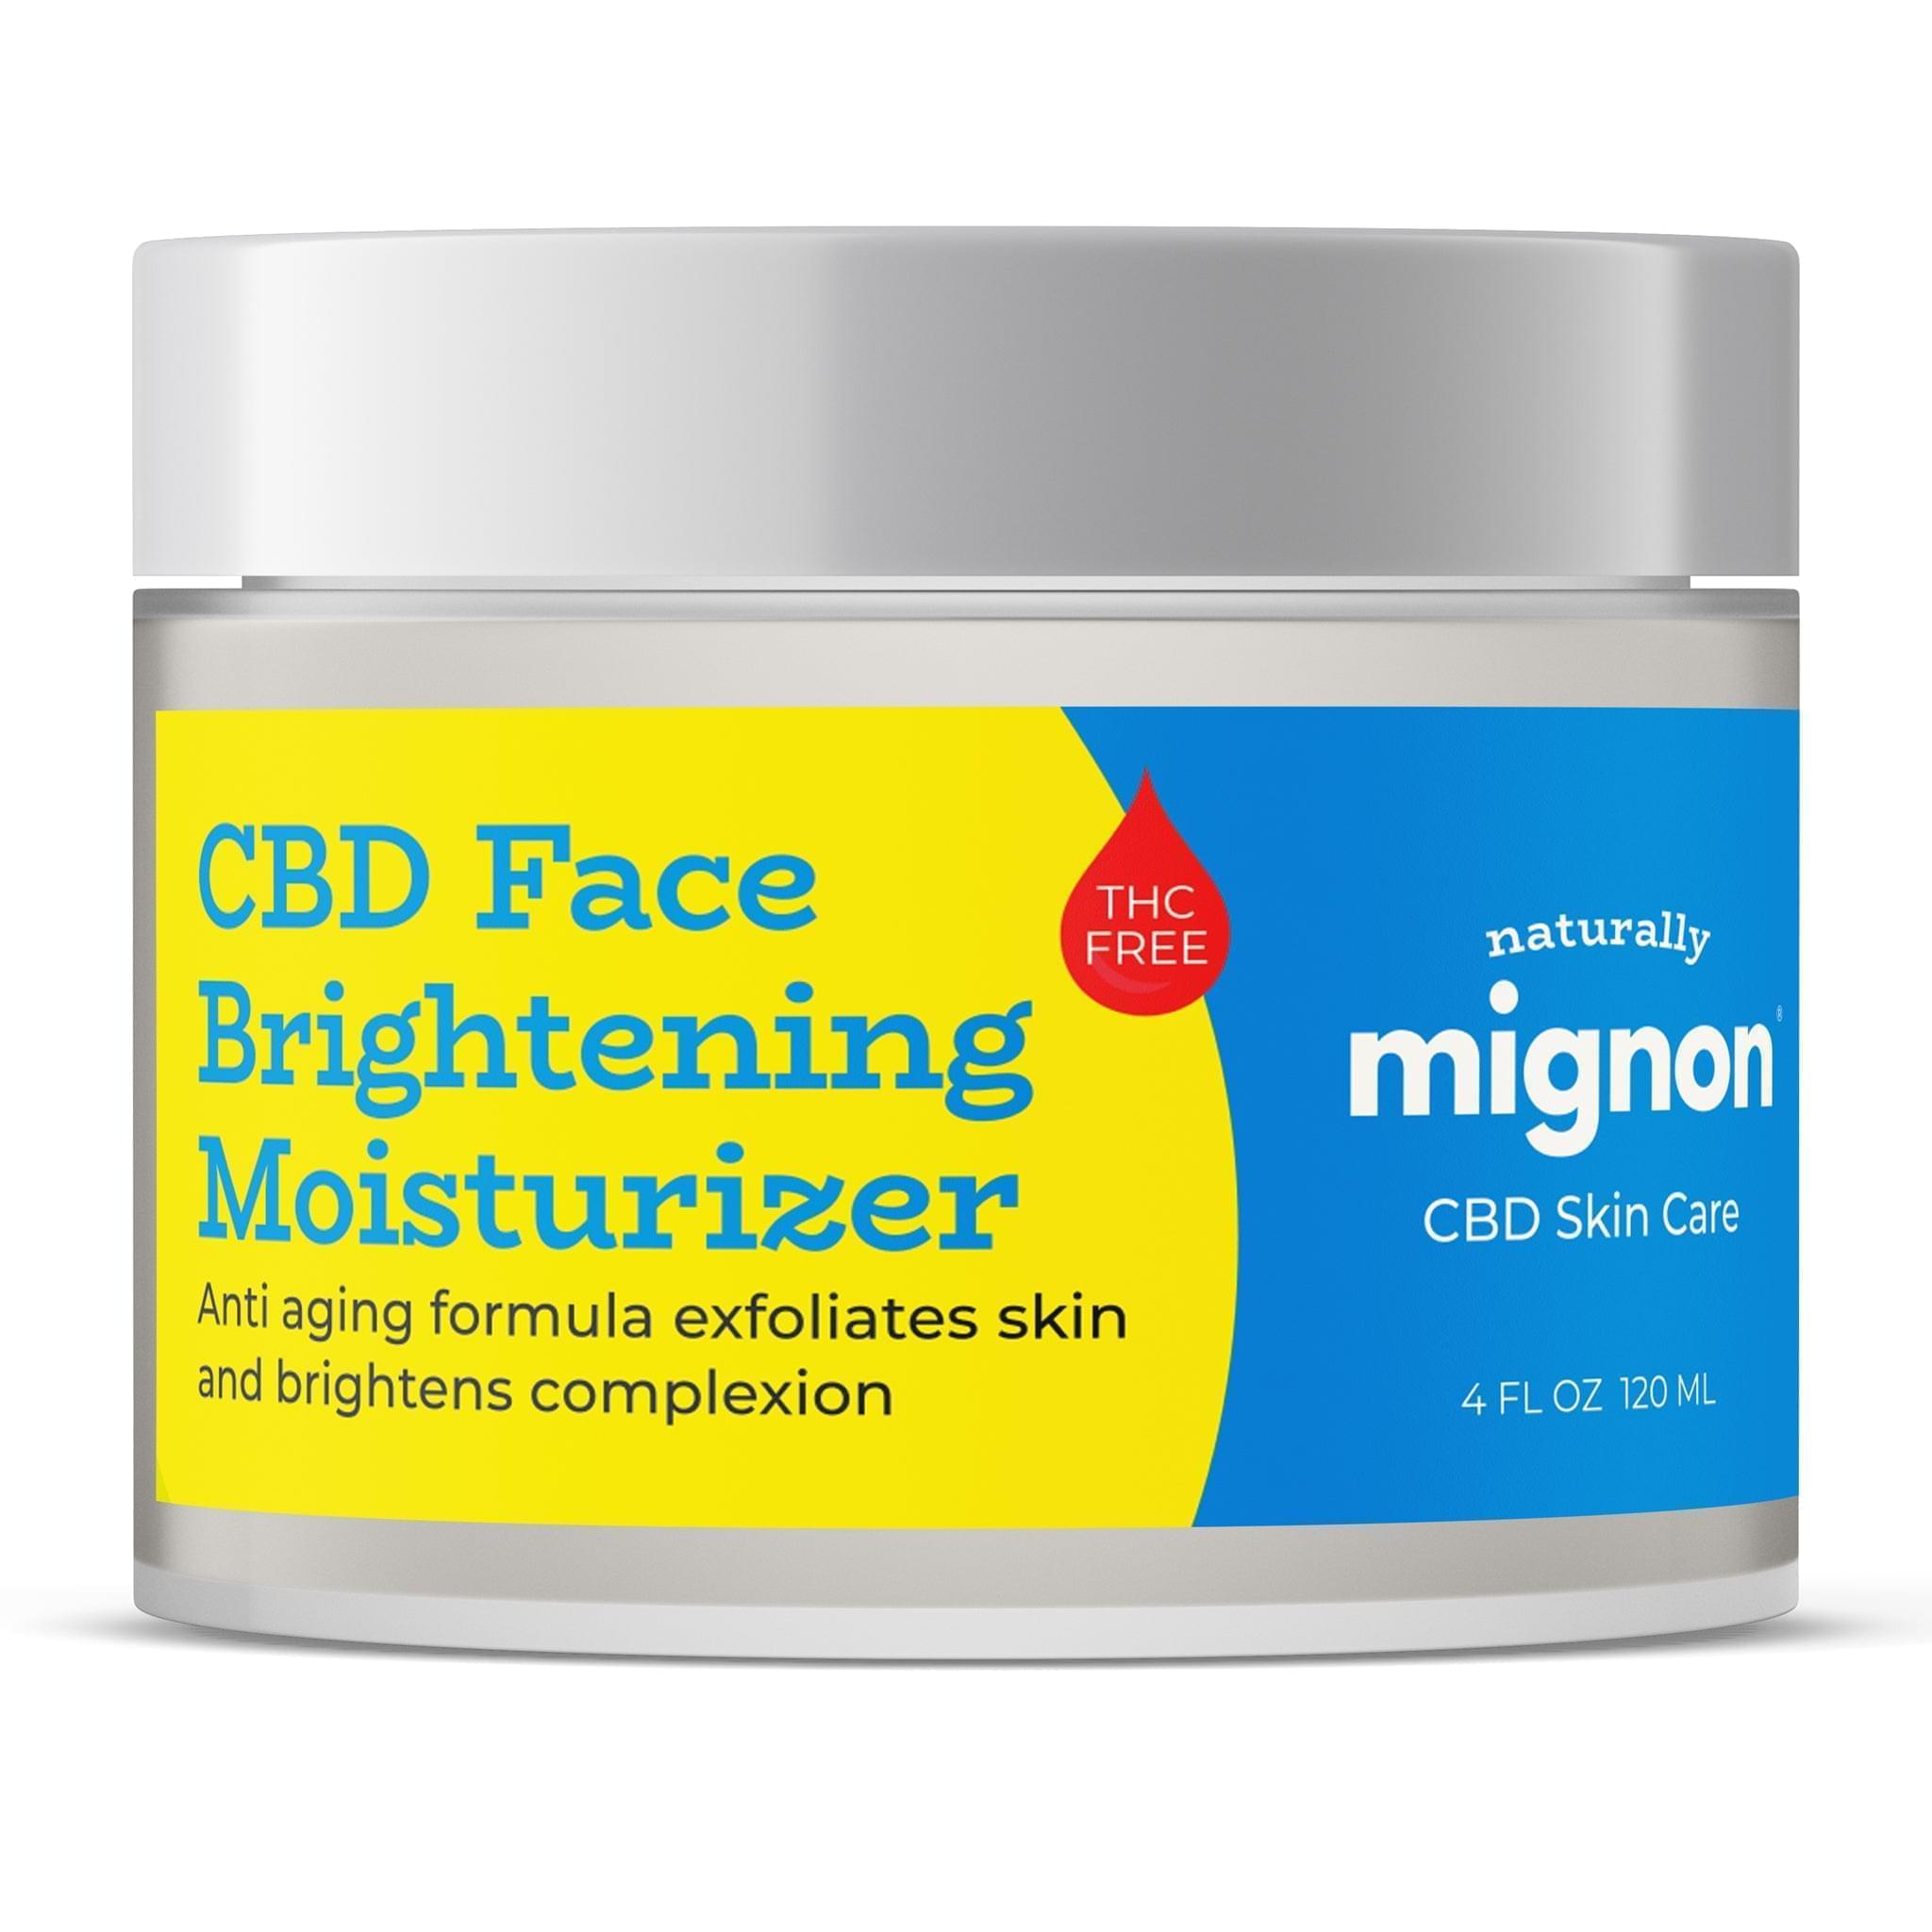 CBD Brightening Face Moisturizer - Naturally Mignon CBD